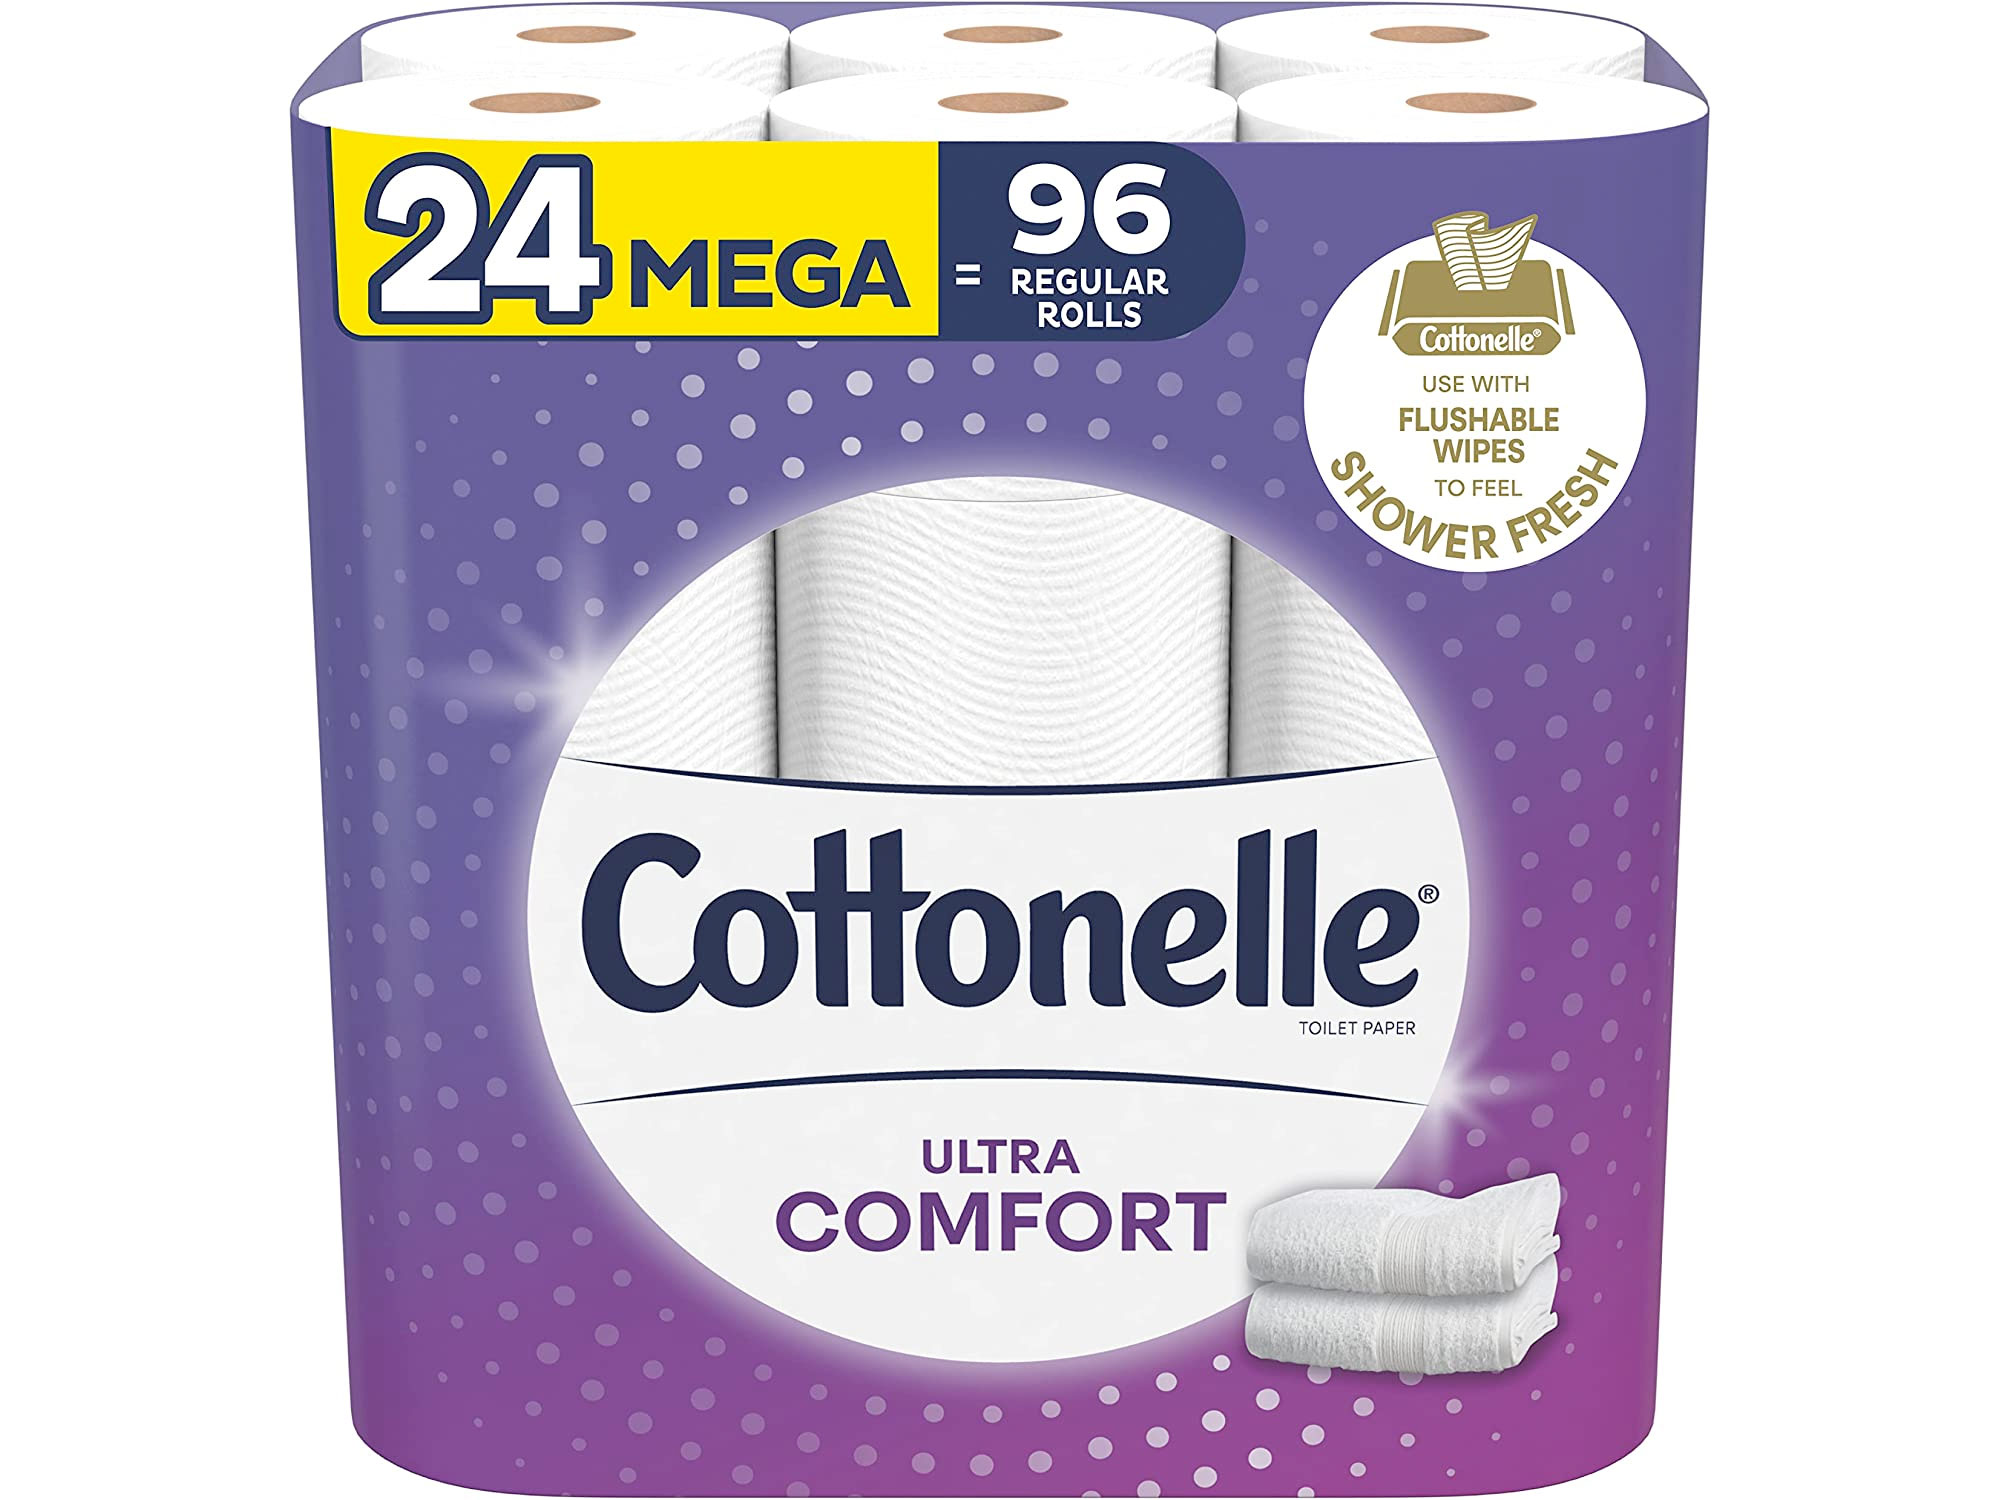 Amazon：Cottonelle Ultra Comfort Toilet Paper 24 Mega Rolls (96 Regular Rolls)只賣$17.32